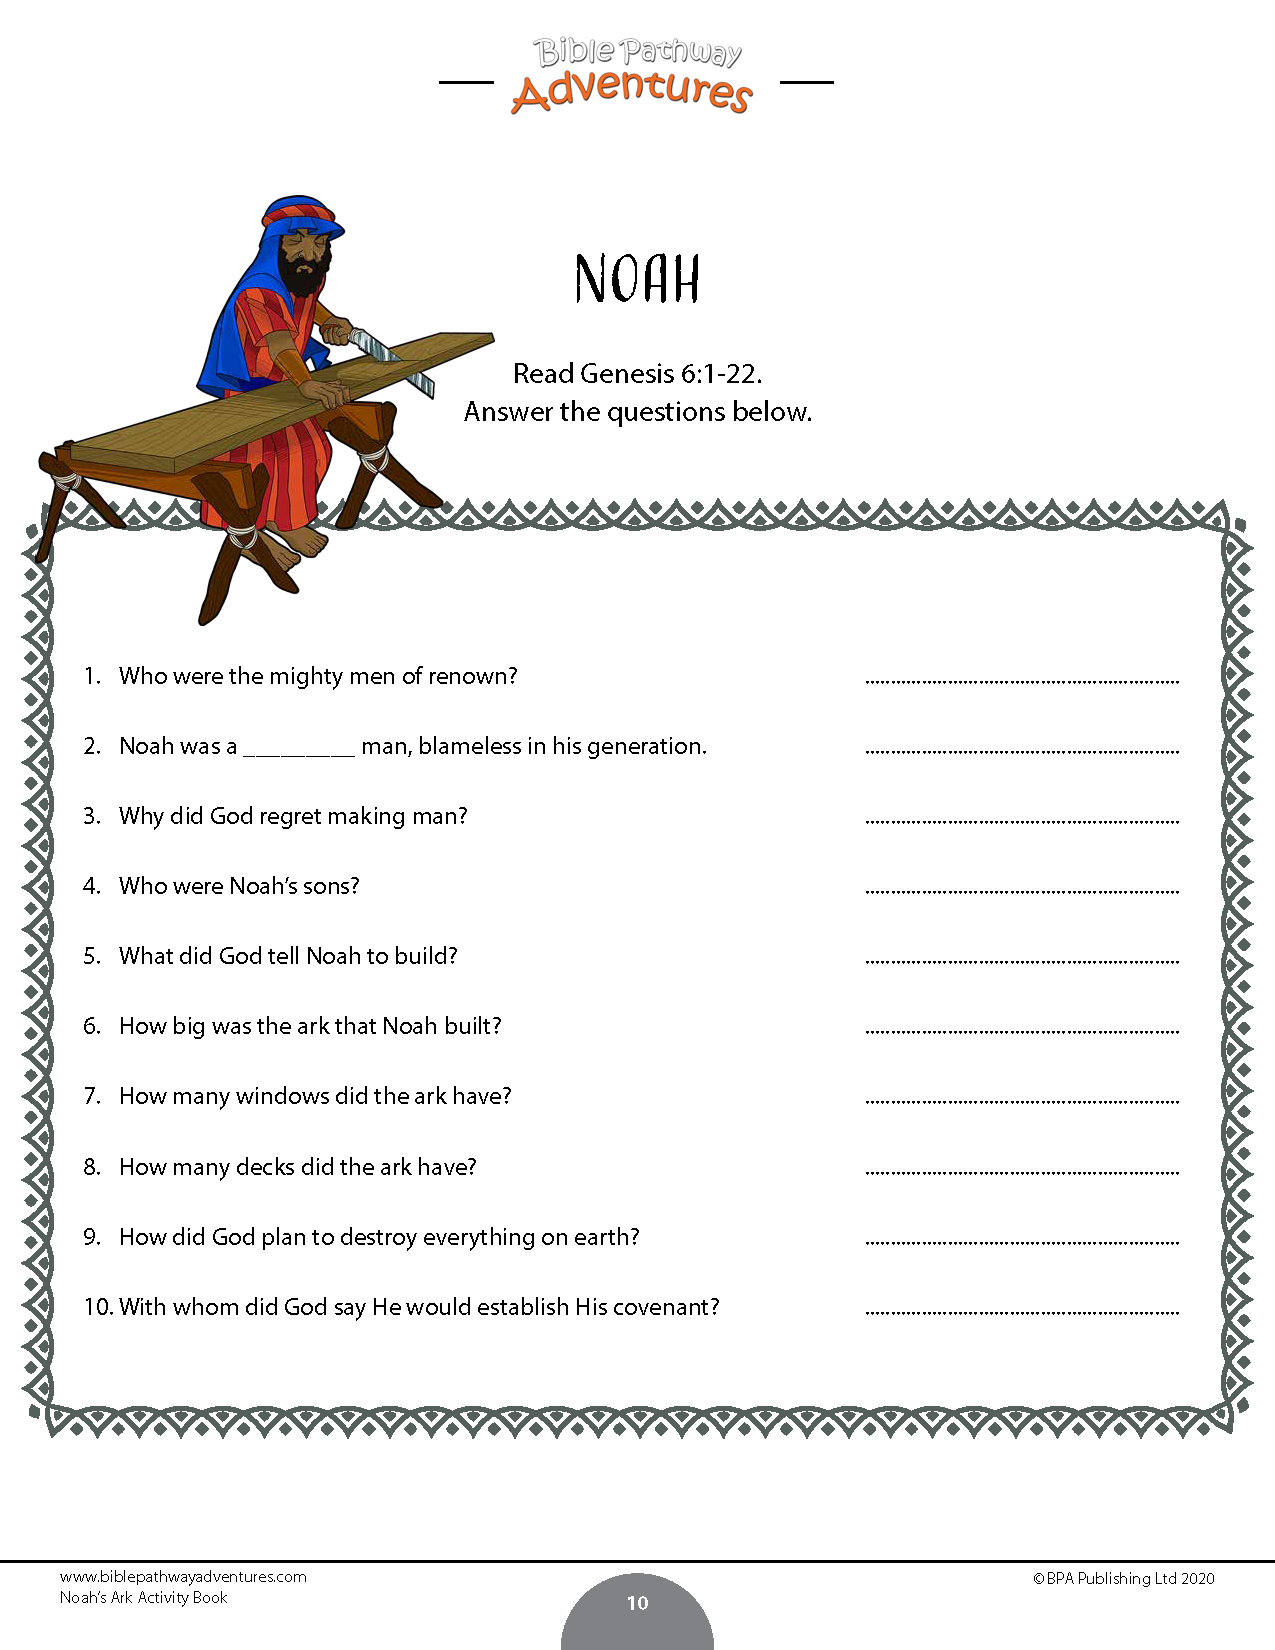 Noah's Ark Activity Book (paperback)